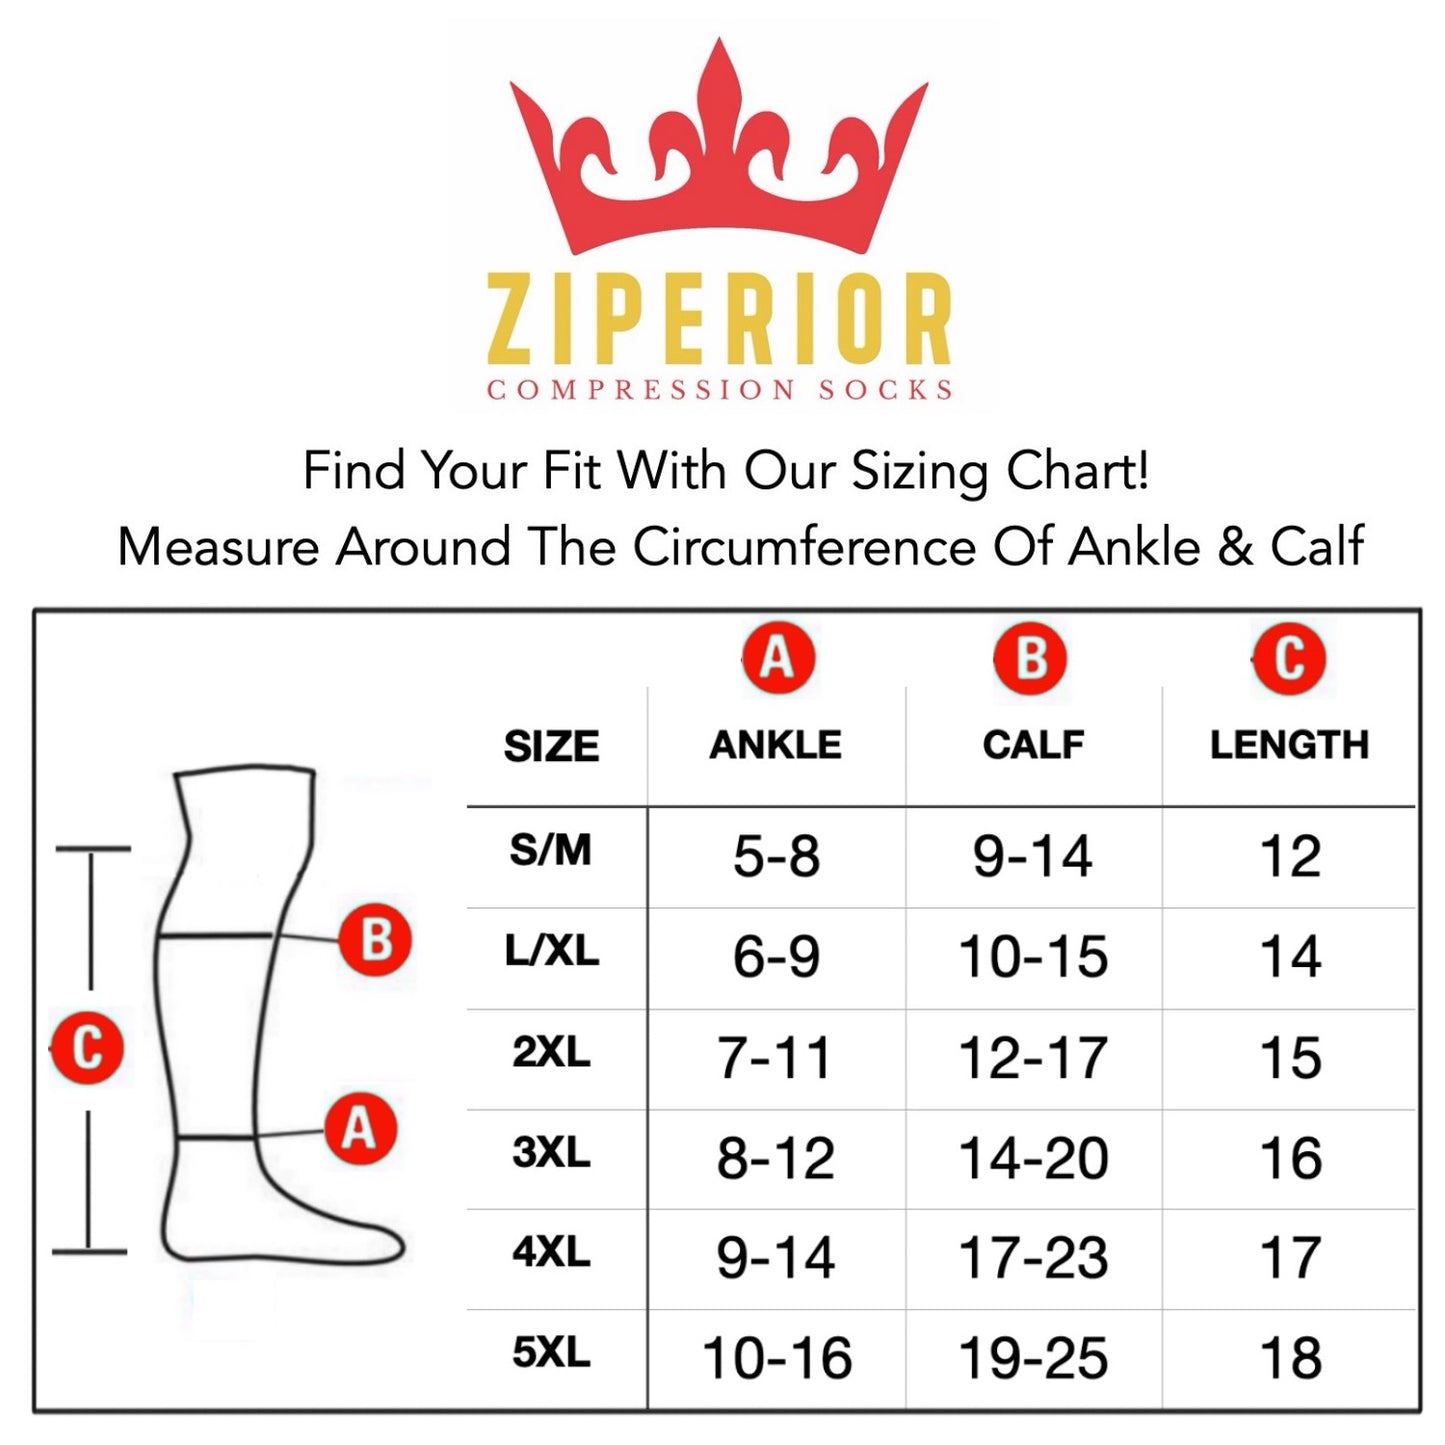 Ziperior Open Toe 15-20 mmHg Compression White Navy Gray Inside Leg Zipper Socks